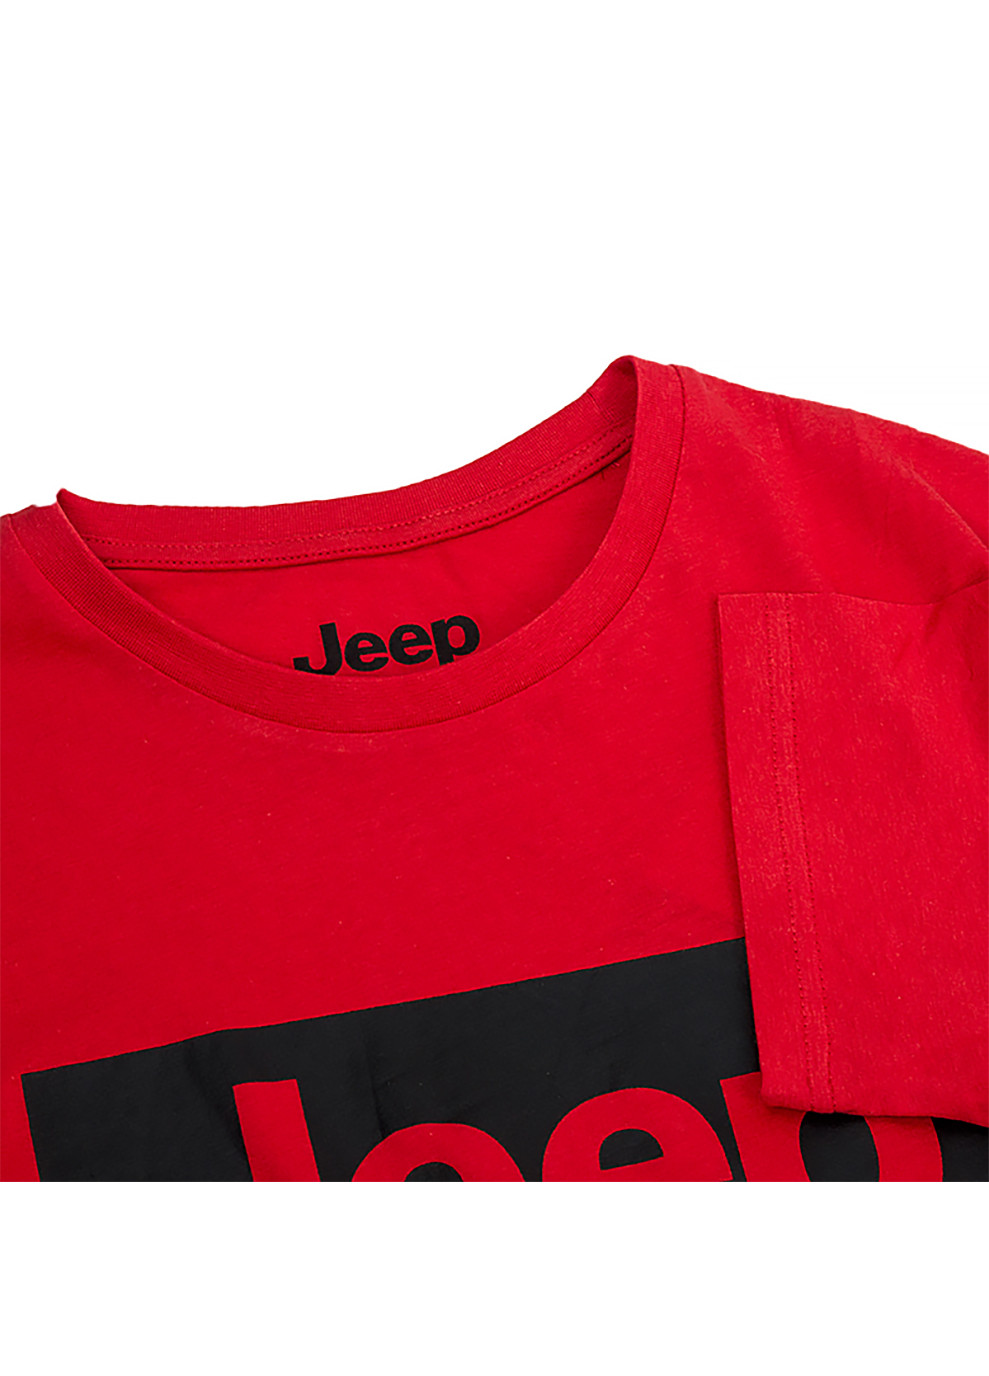 Красная мужская футболка t-shirt contours j22w красный l (o102581-r699 l) Jeep